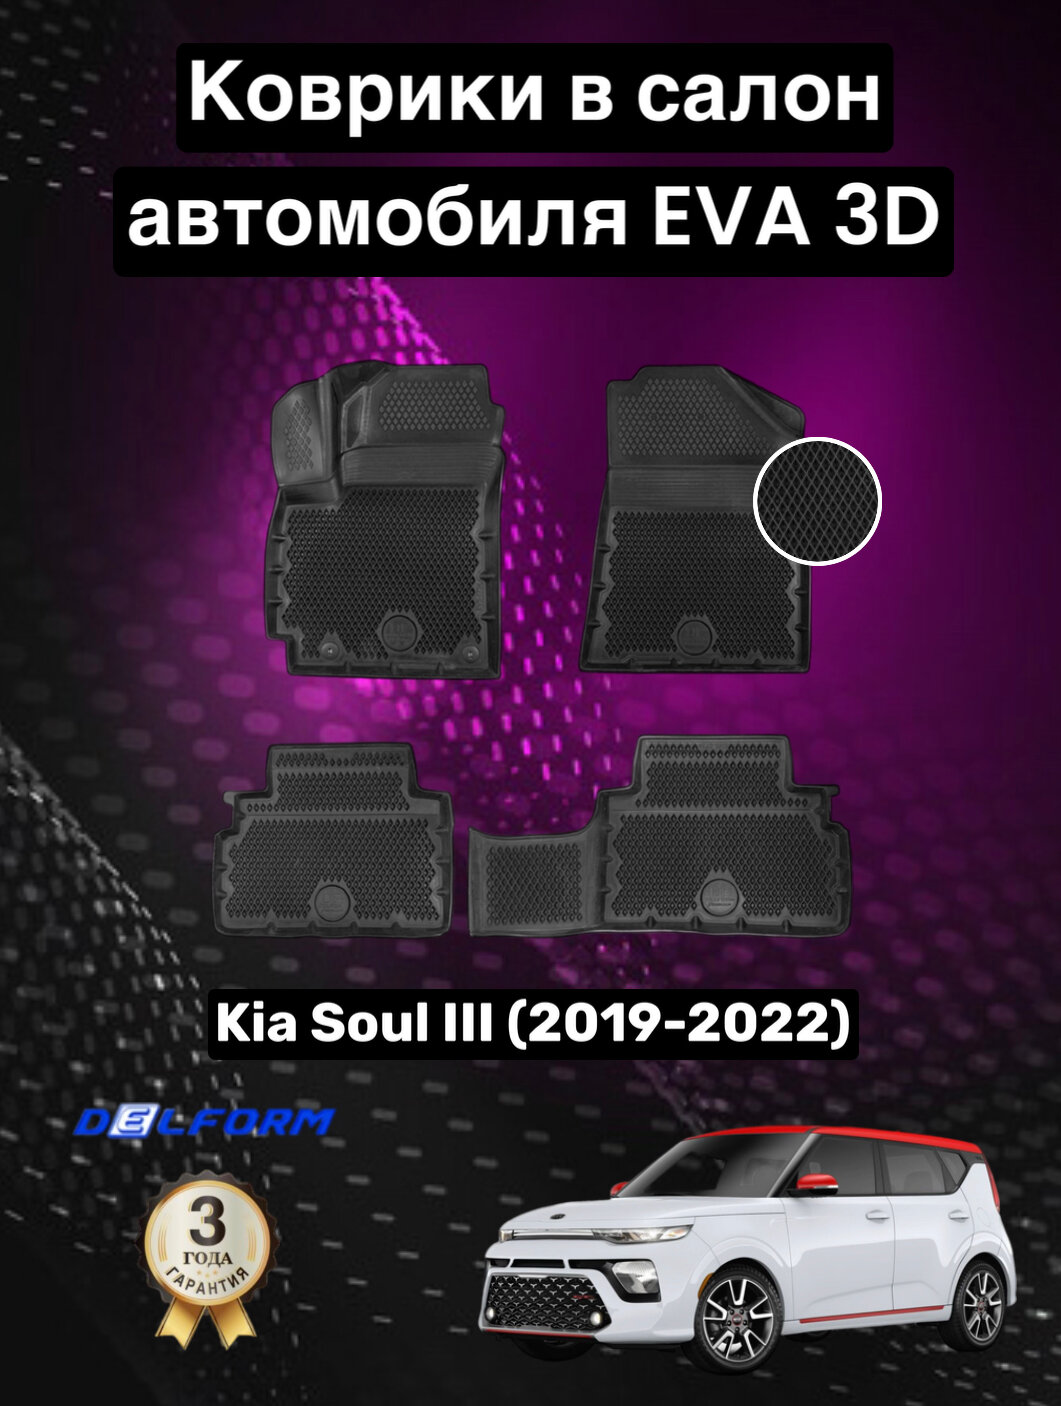 Эва/Eva Ева коврики c бортами Киа Соул 3 (2019-2022)/Kia Soul llI (2019-2022) DELFORM 3D Premium ("EVA 3D") cалон